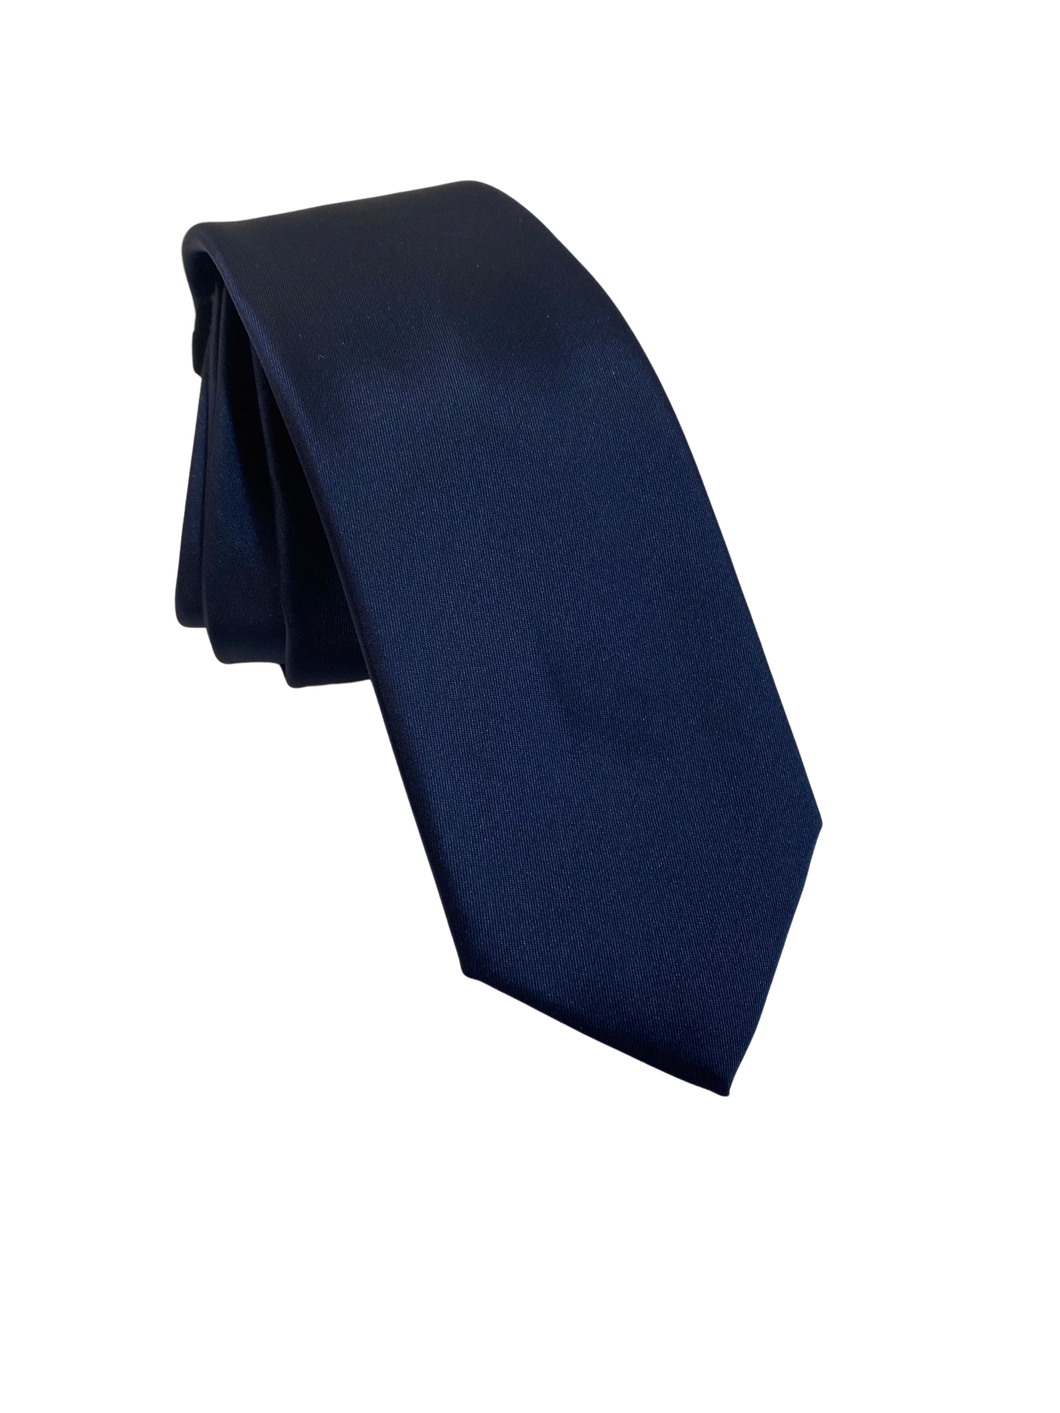 FX Fusion Navy Skinny Tie